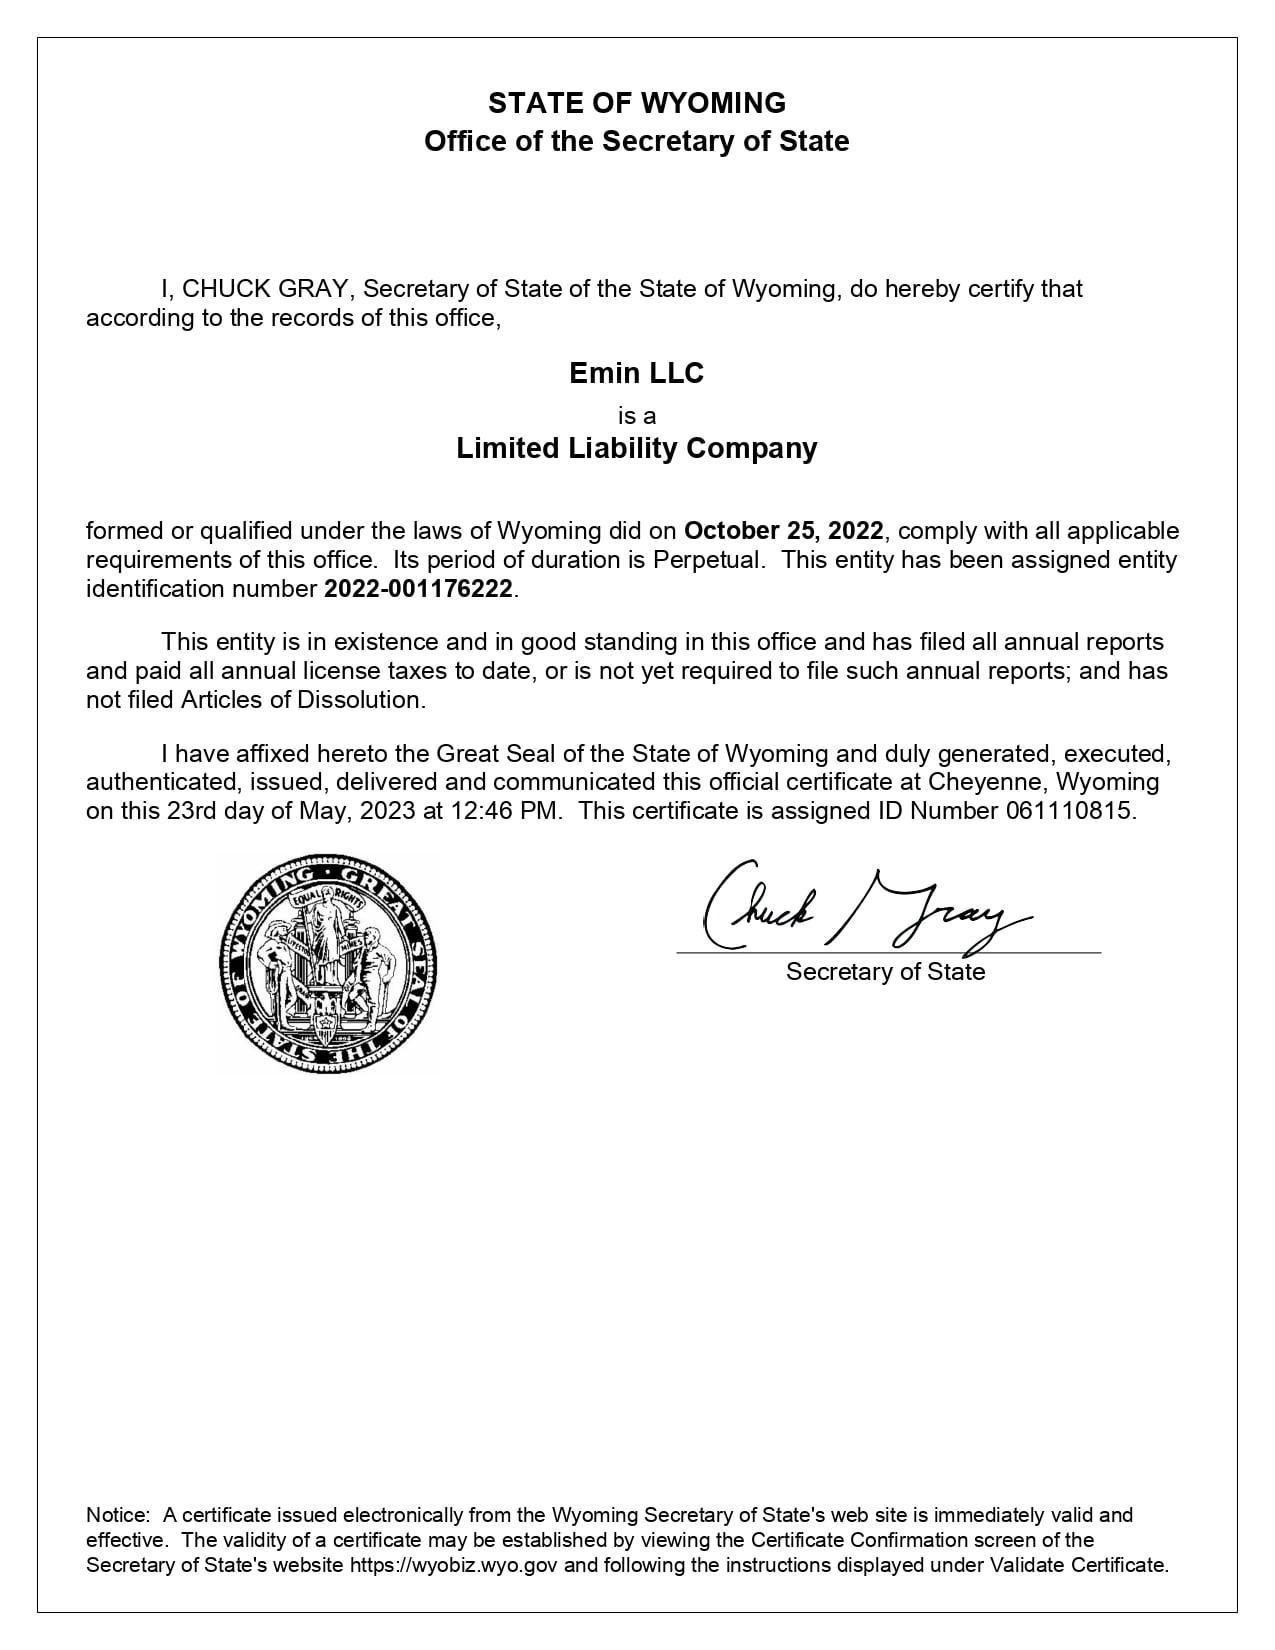 Emin LLC - Certificate Of Good Standing